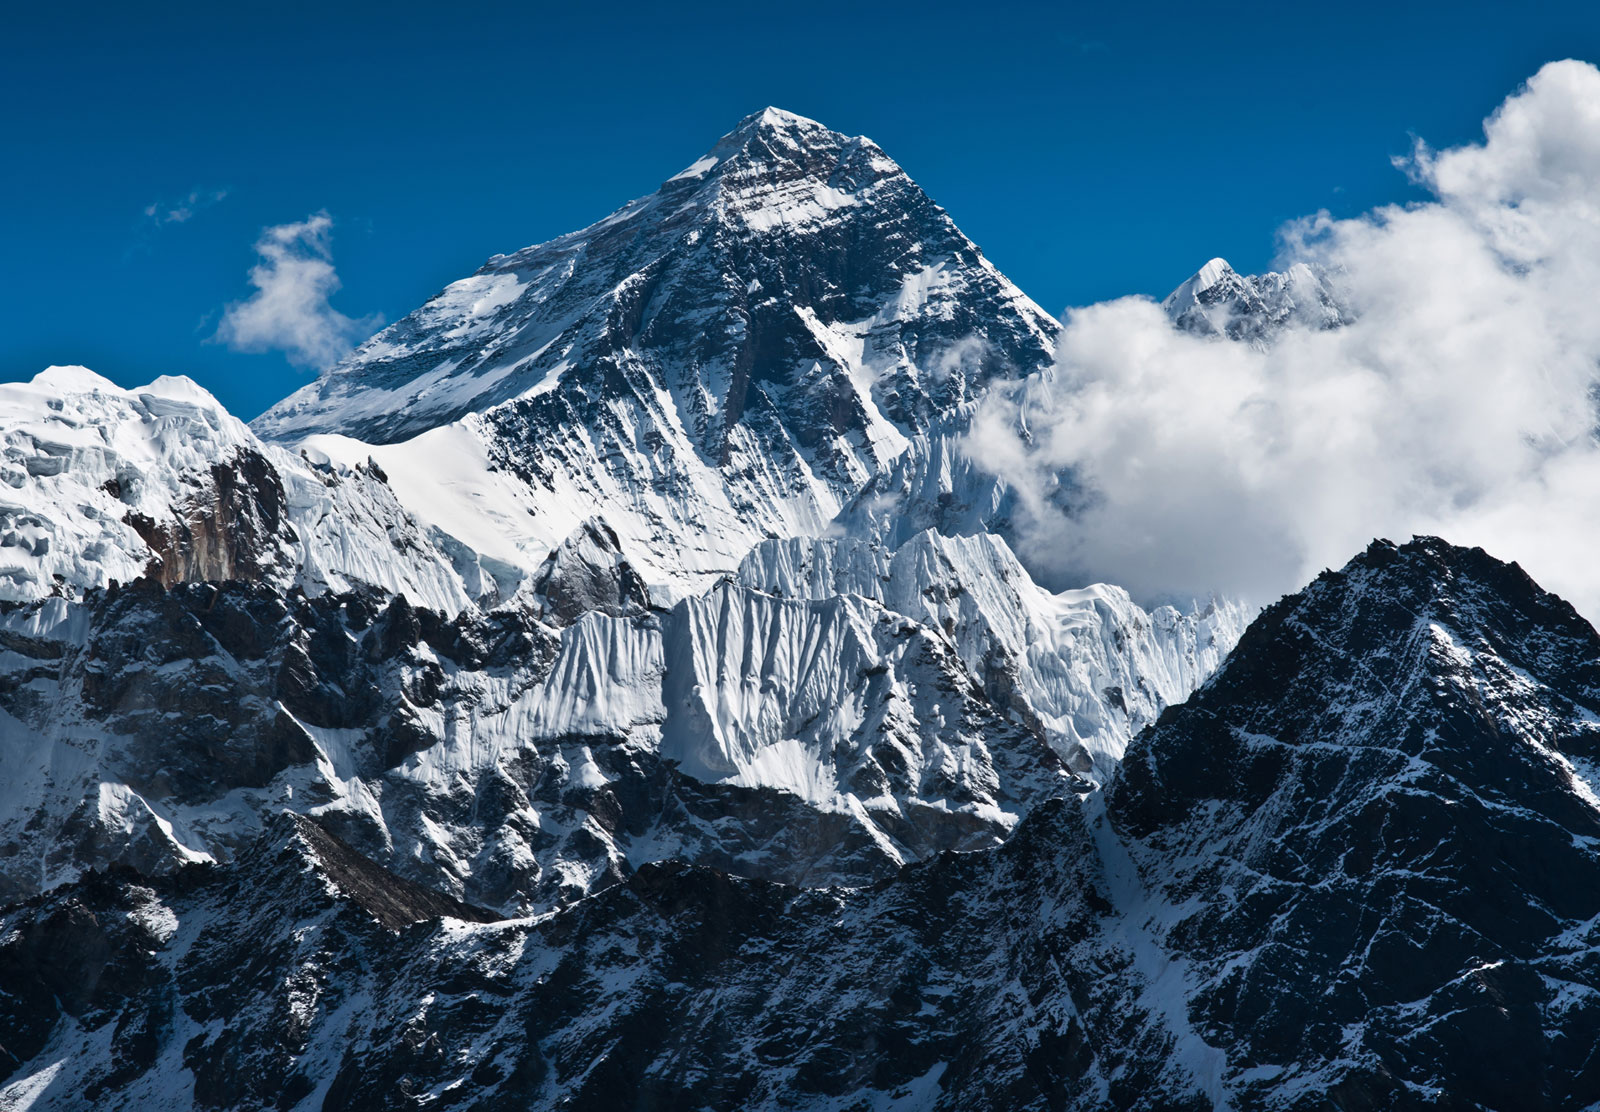 New height of Mt Everest measure 8848.86 meters